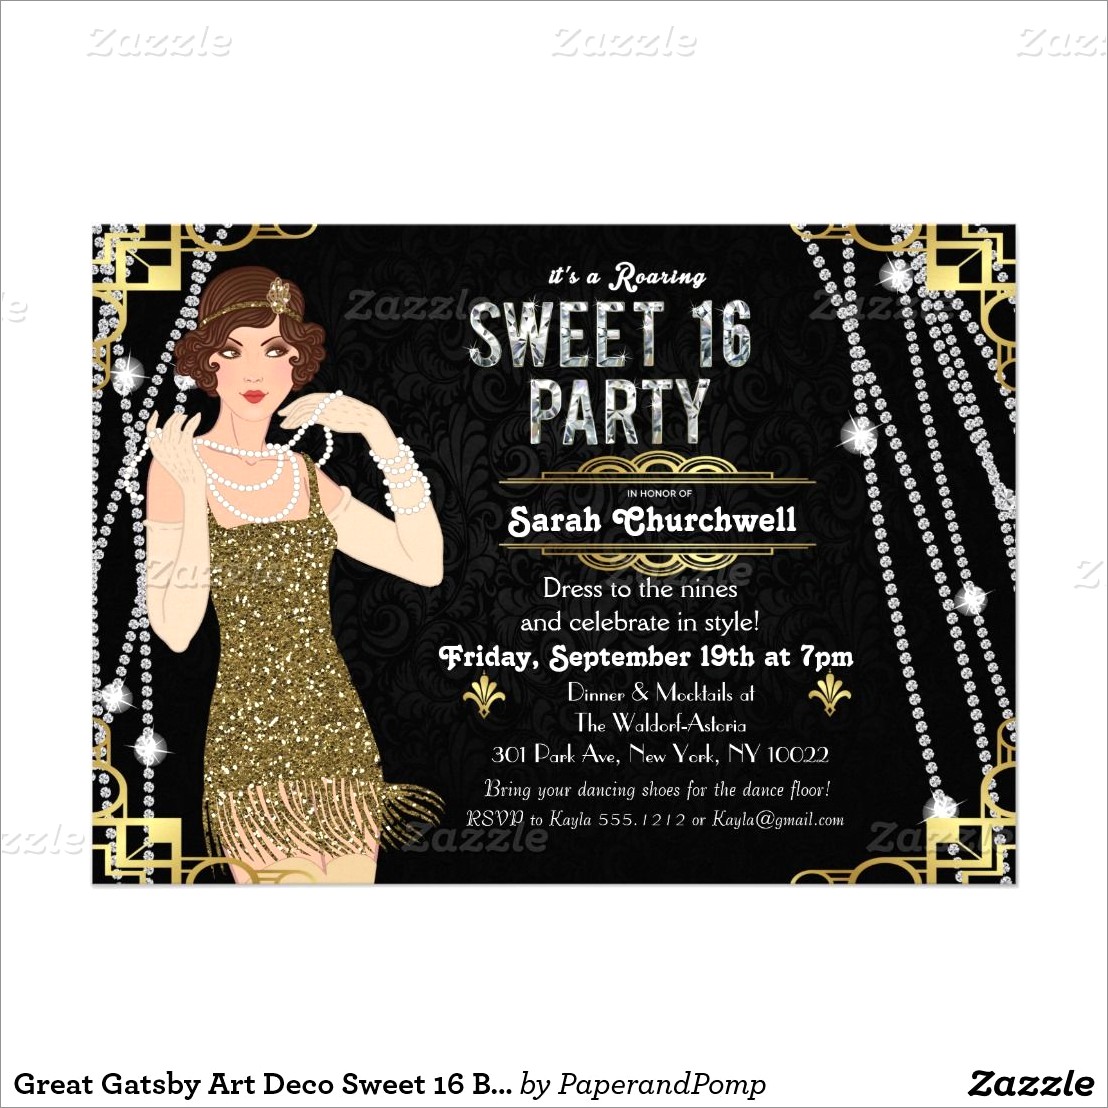 Great Gatsby Sweet 16 Invitations